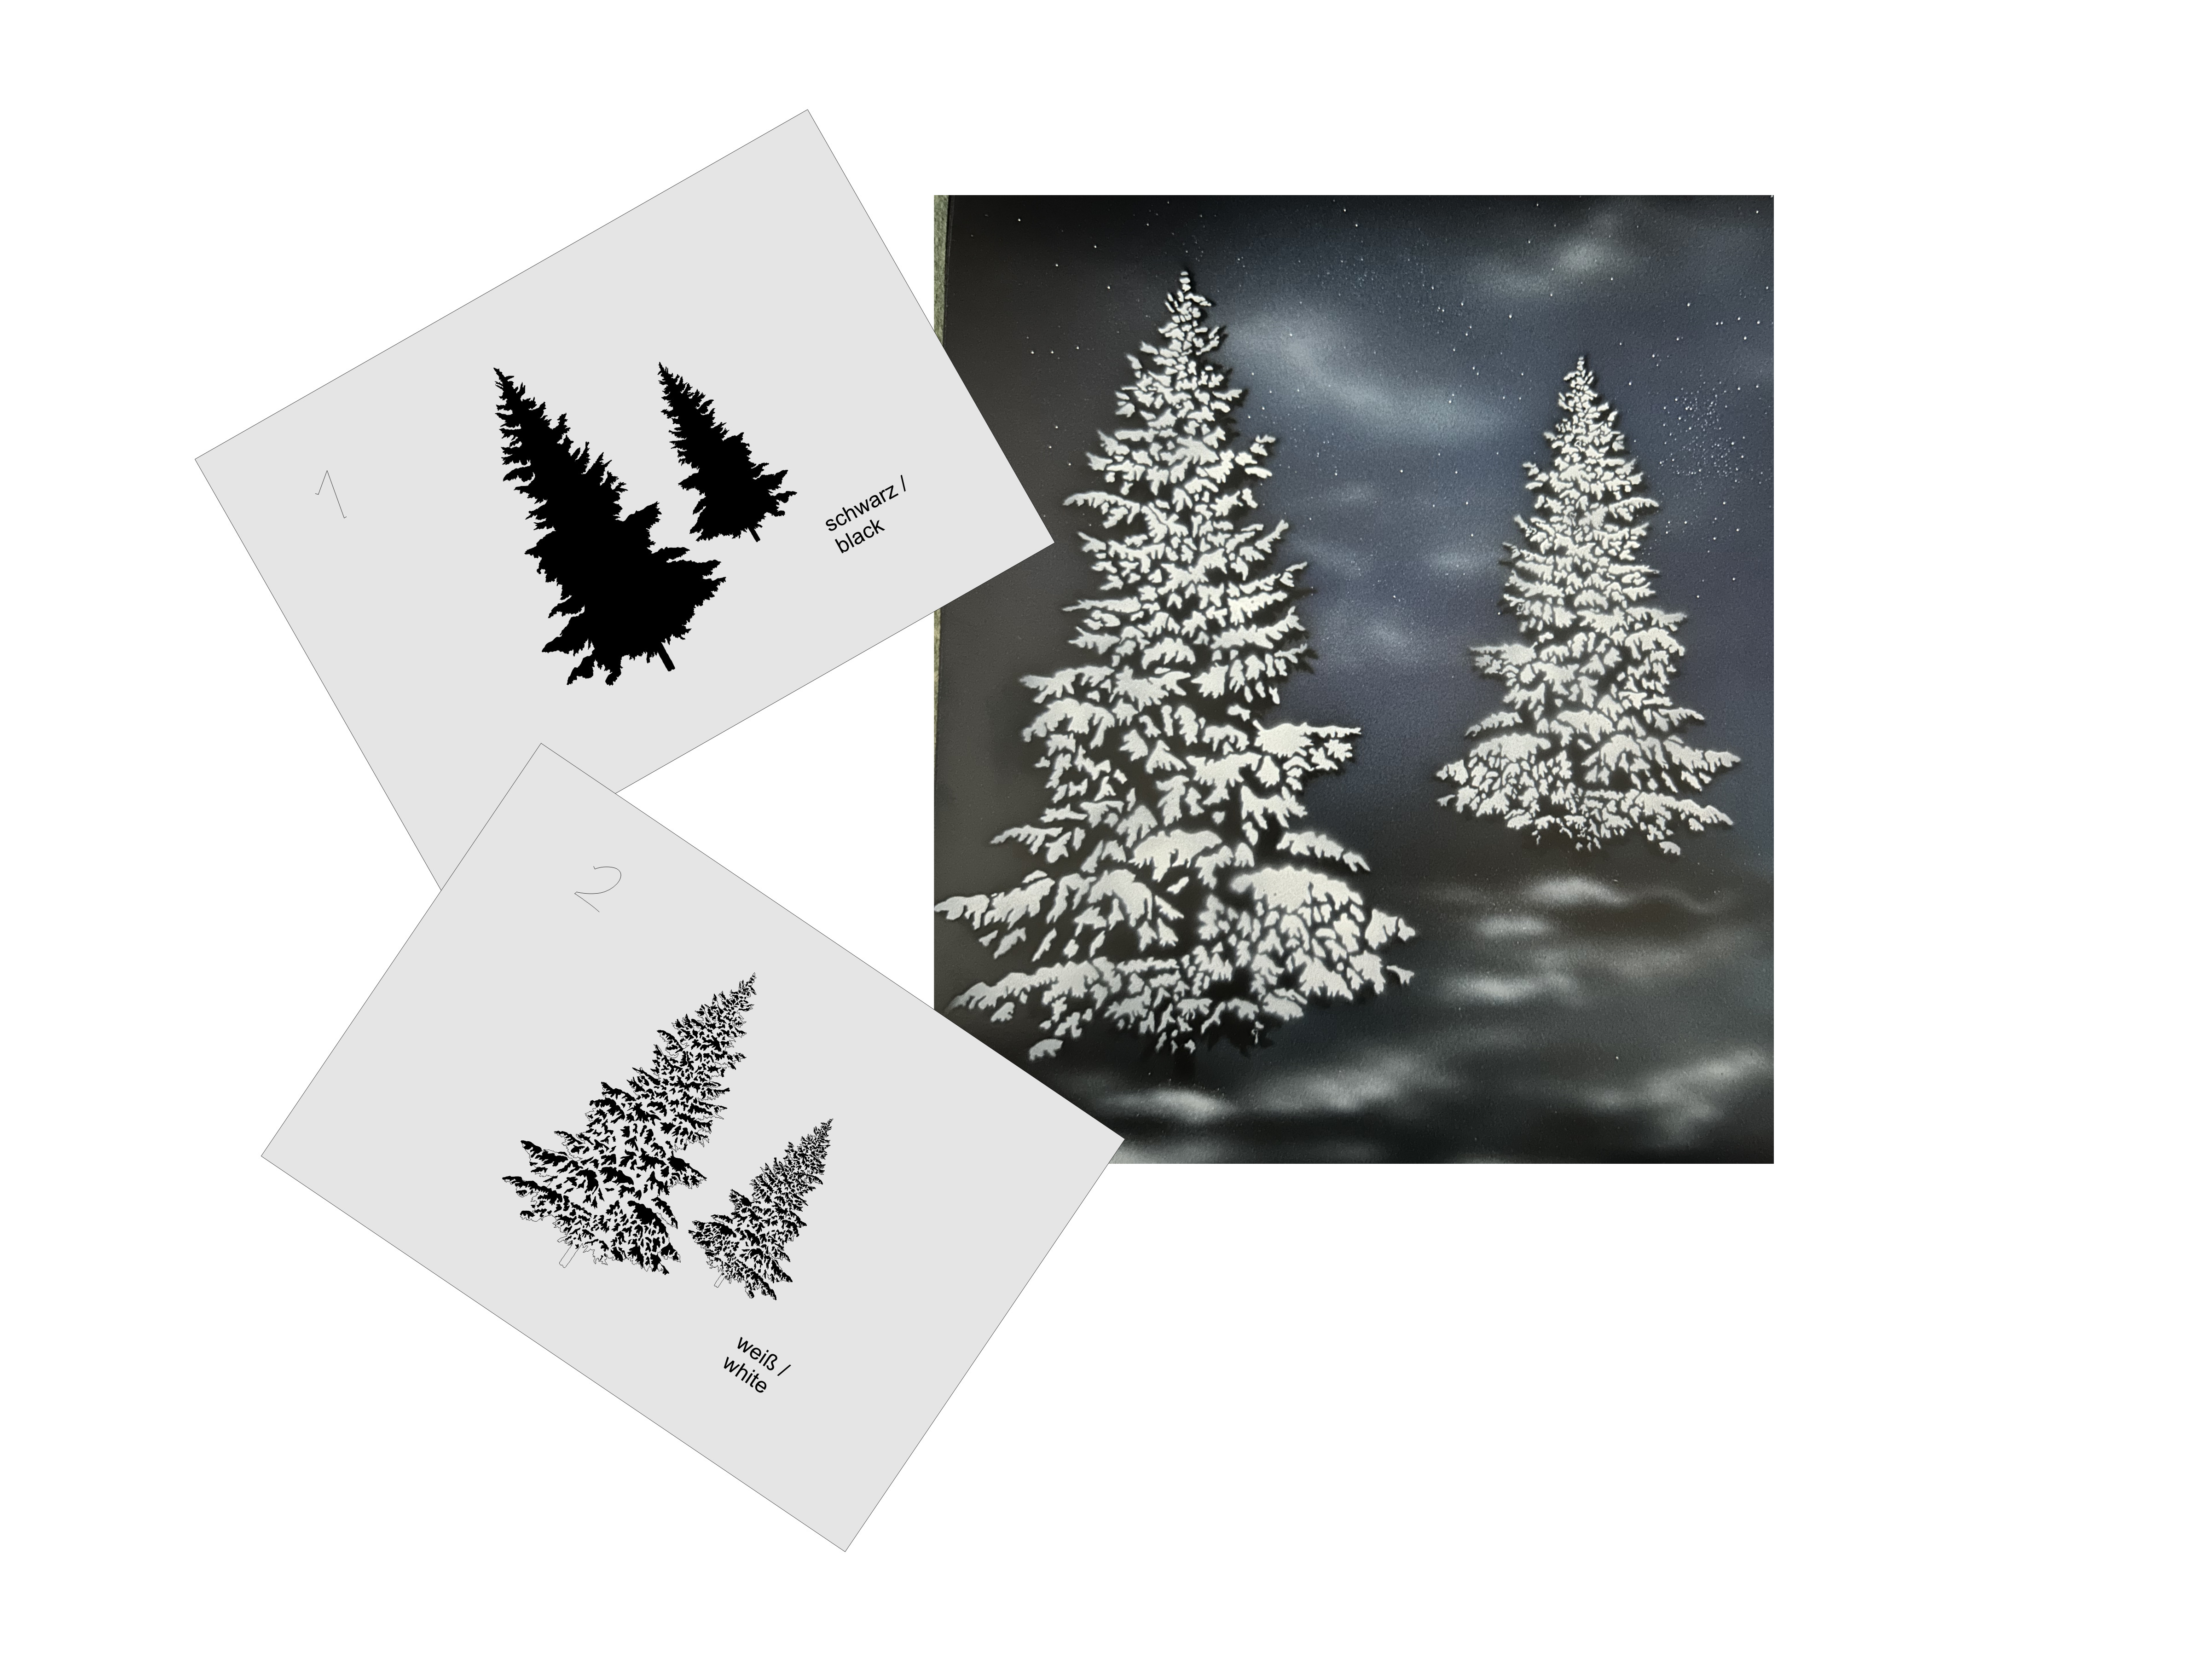 AS-353 Schnee Tannen / Snow fir trees Step by Step Airbrushschablone XL